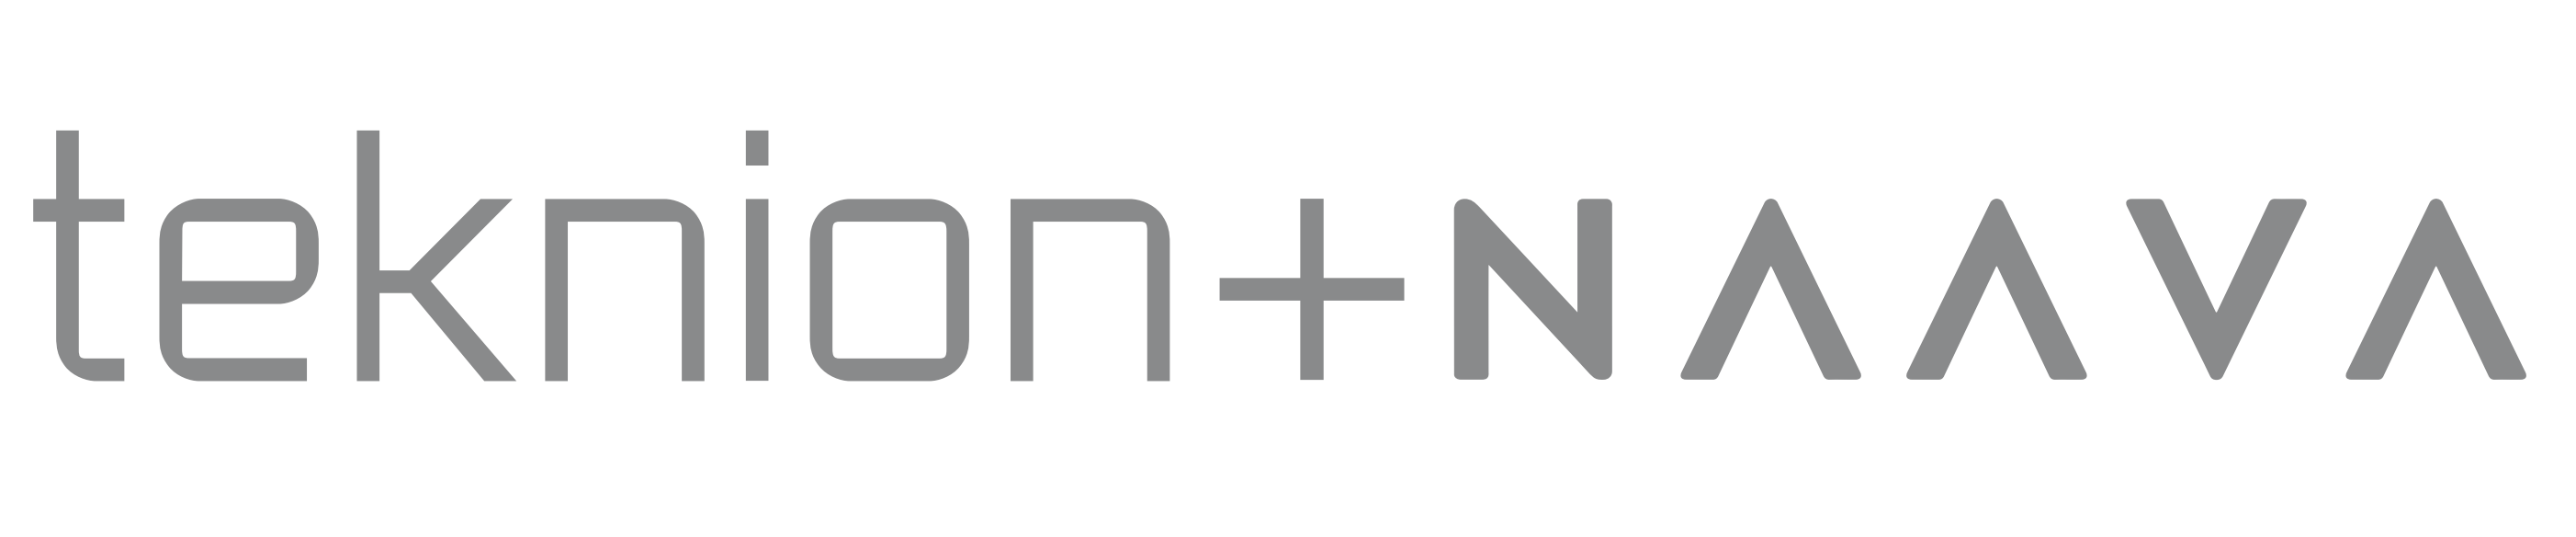 teknion + naava logo